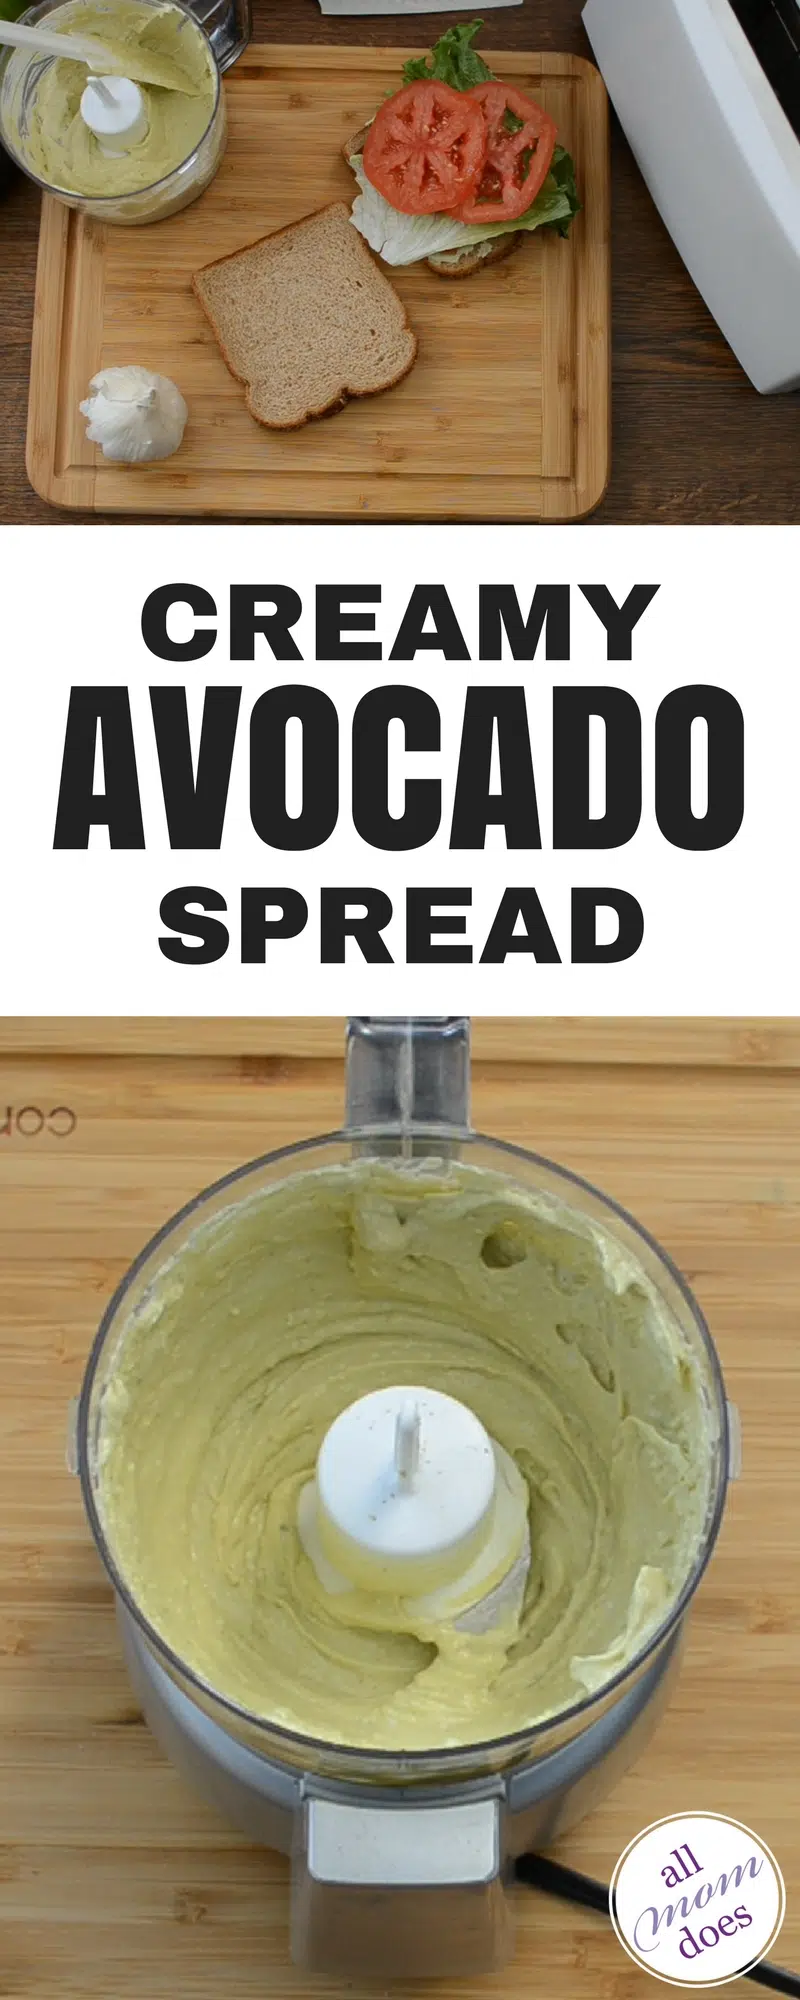 creamy avocado spread - great alternative to mayonnaise! #avocado #healthyrecipe #sandwich